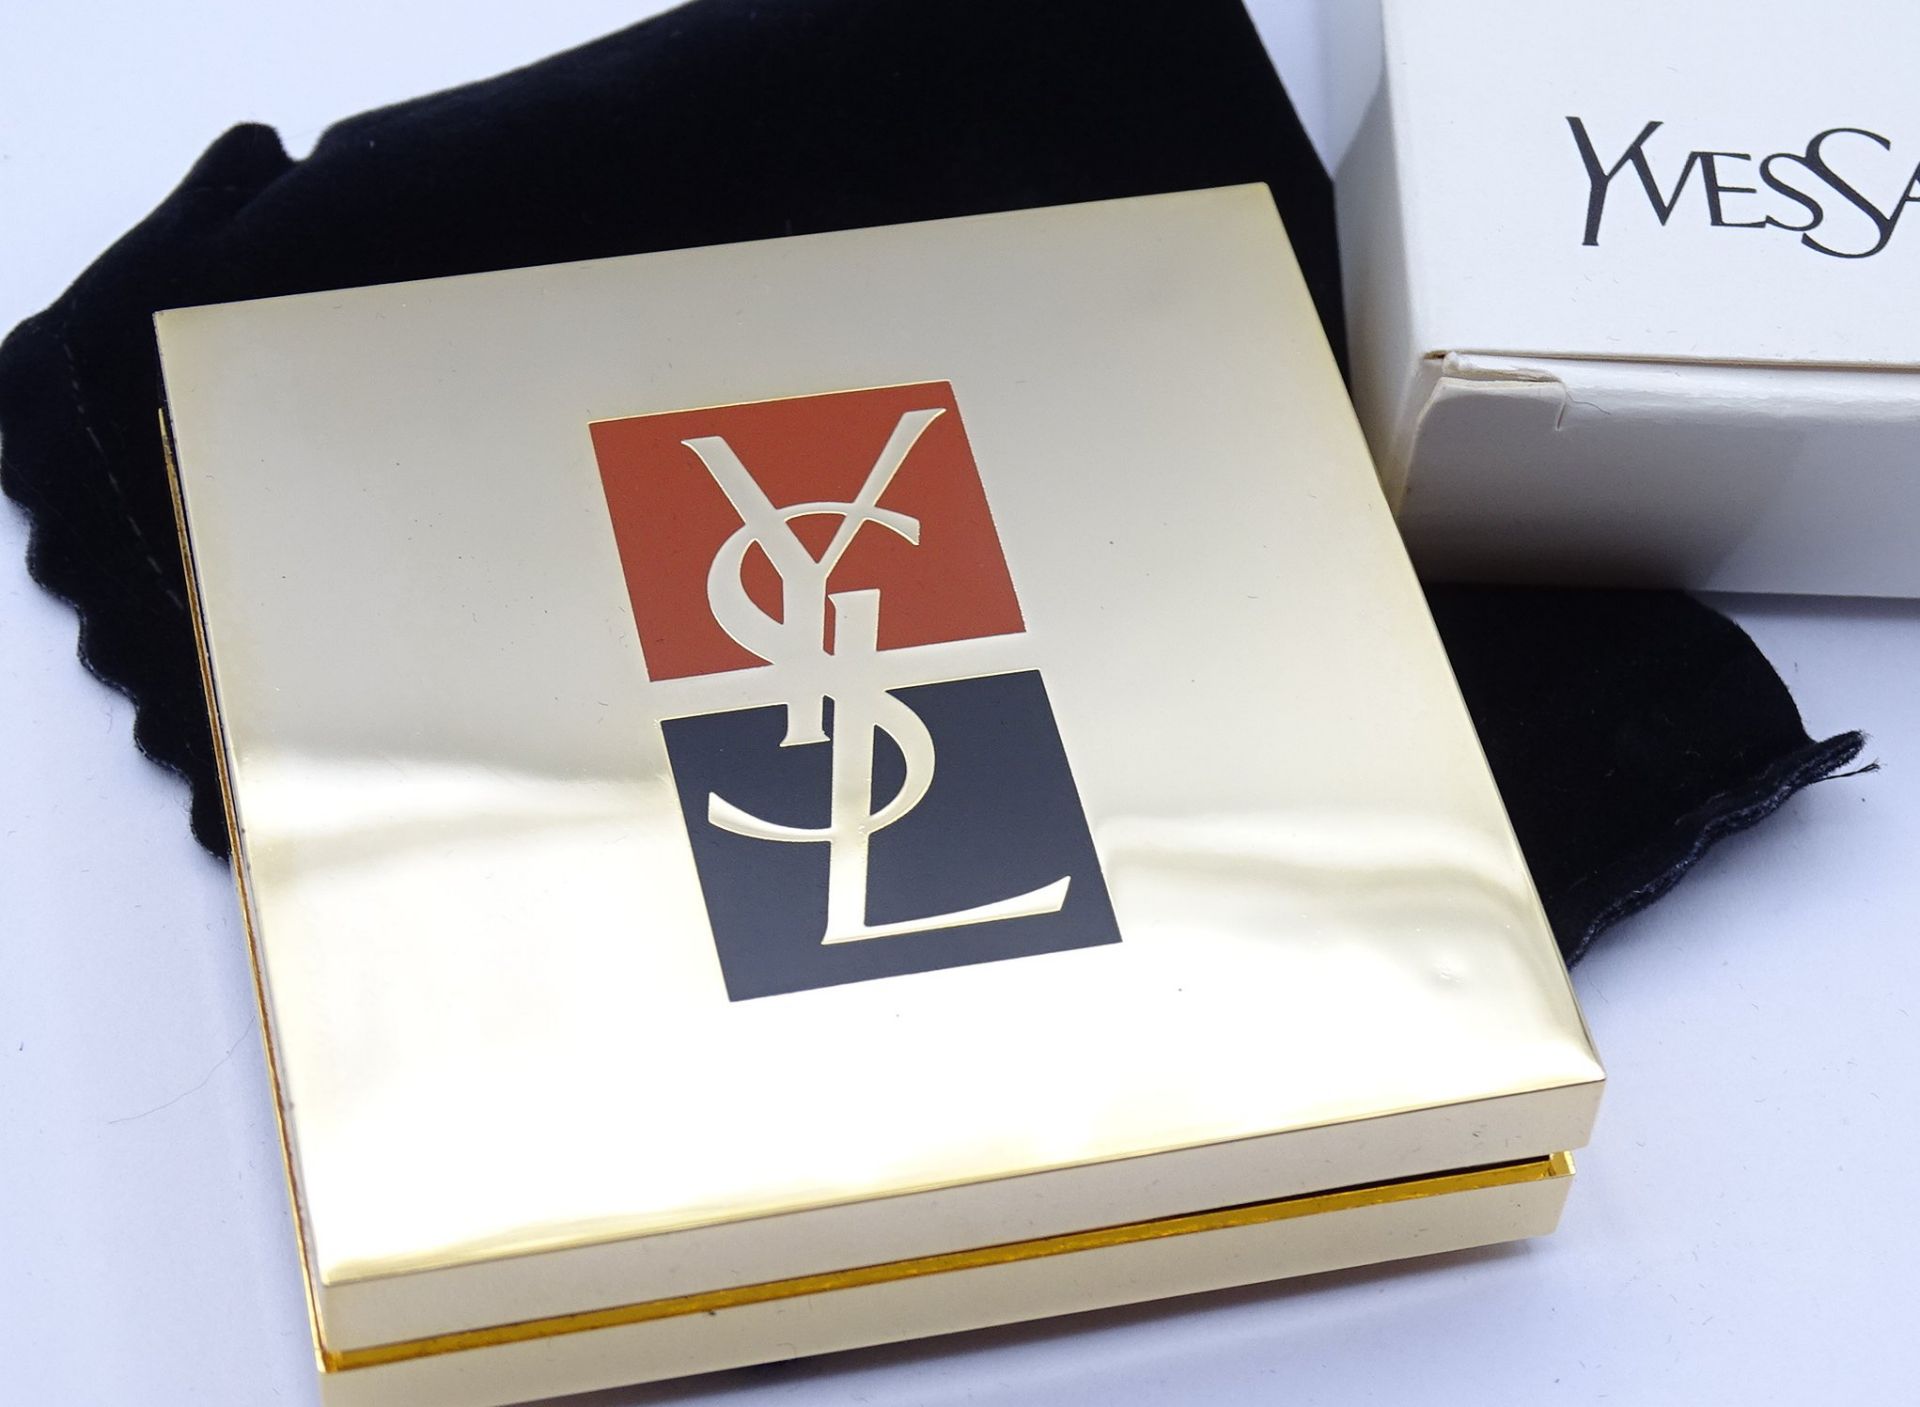 "Yves Saint Laurent" Handspiegel, OVP - Bild 2 aus 2